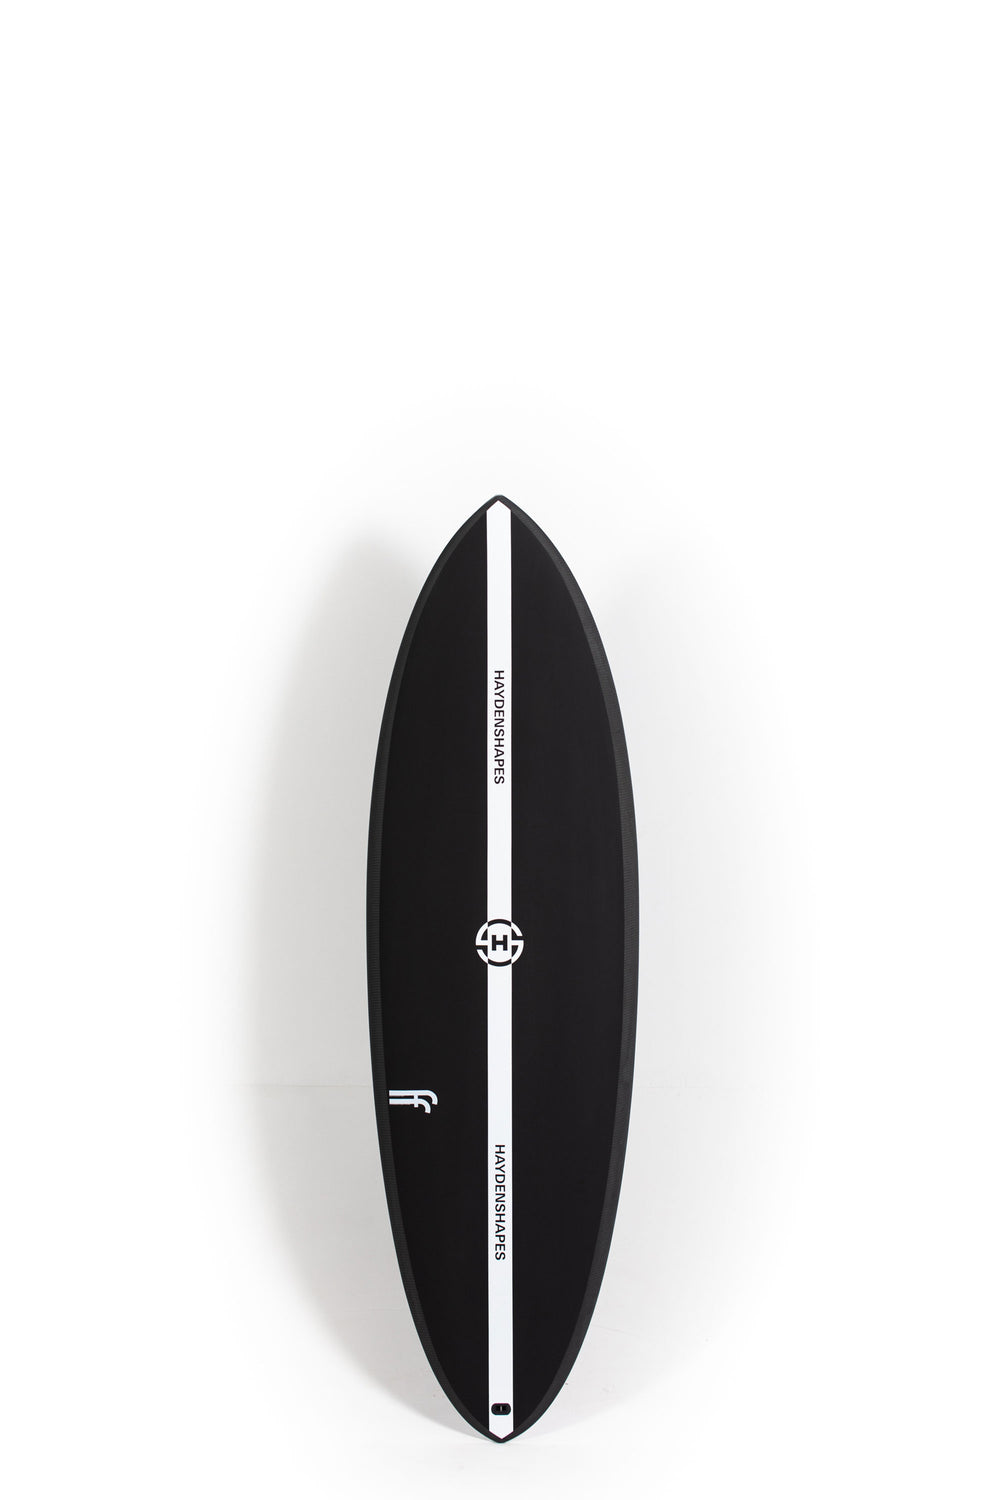 Pukas Surf Shop - HAYDEN SHAPES SURFBOARDS - HYPTO KRIPTO 5'9